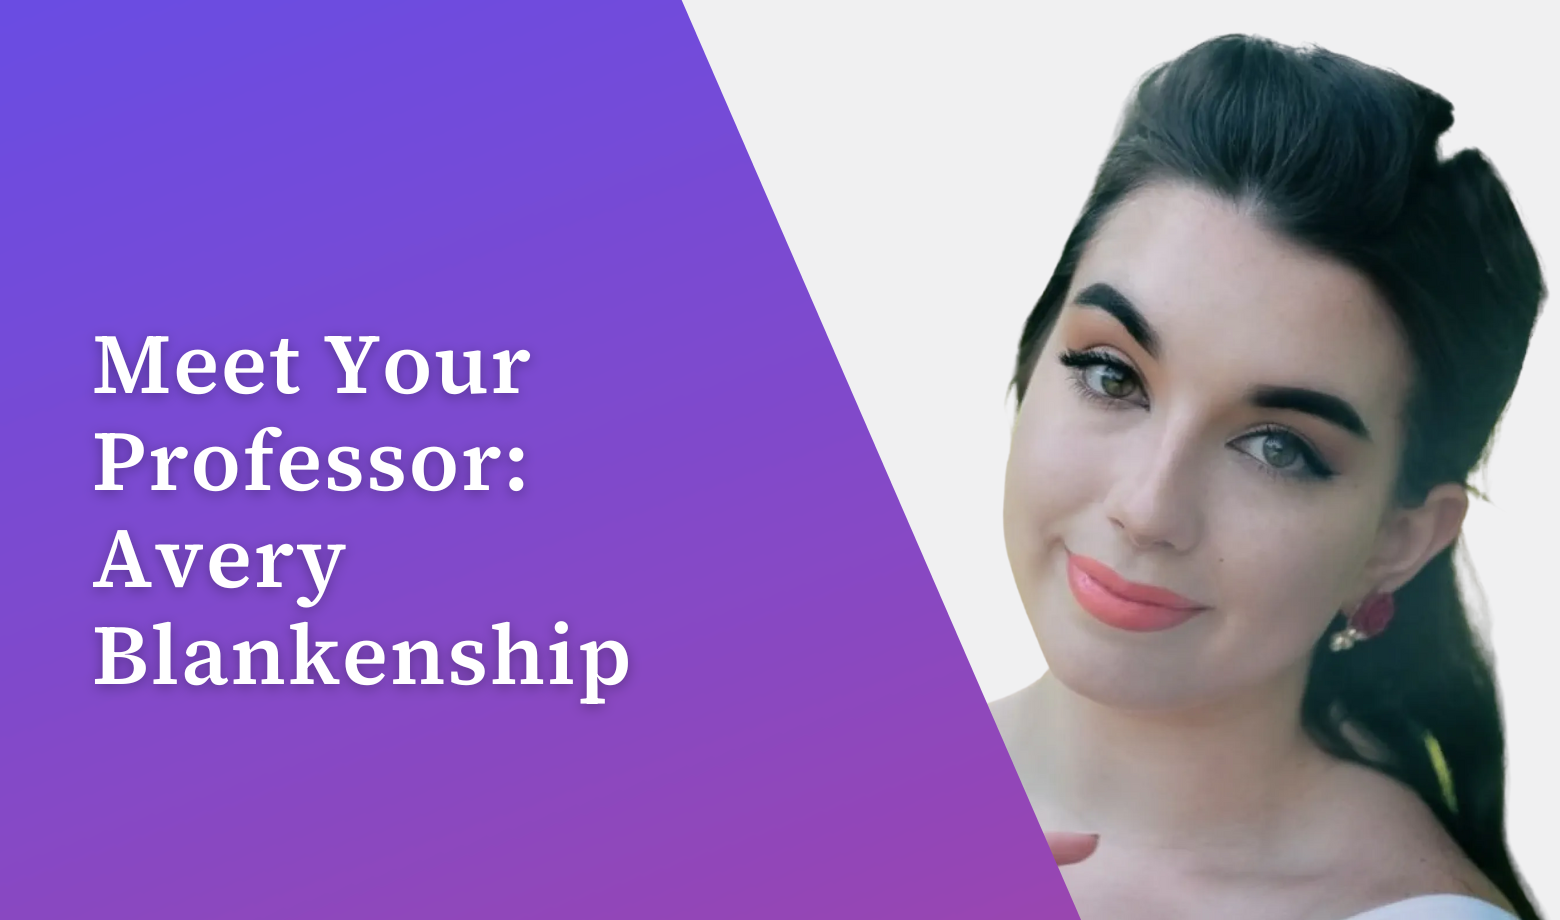 Meet Your Professor: Avery Blankenship